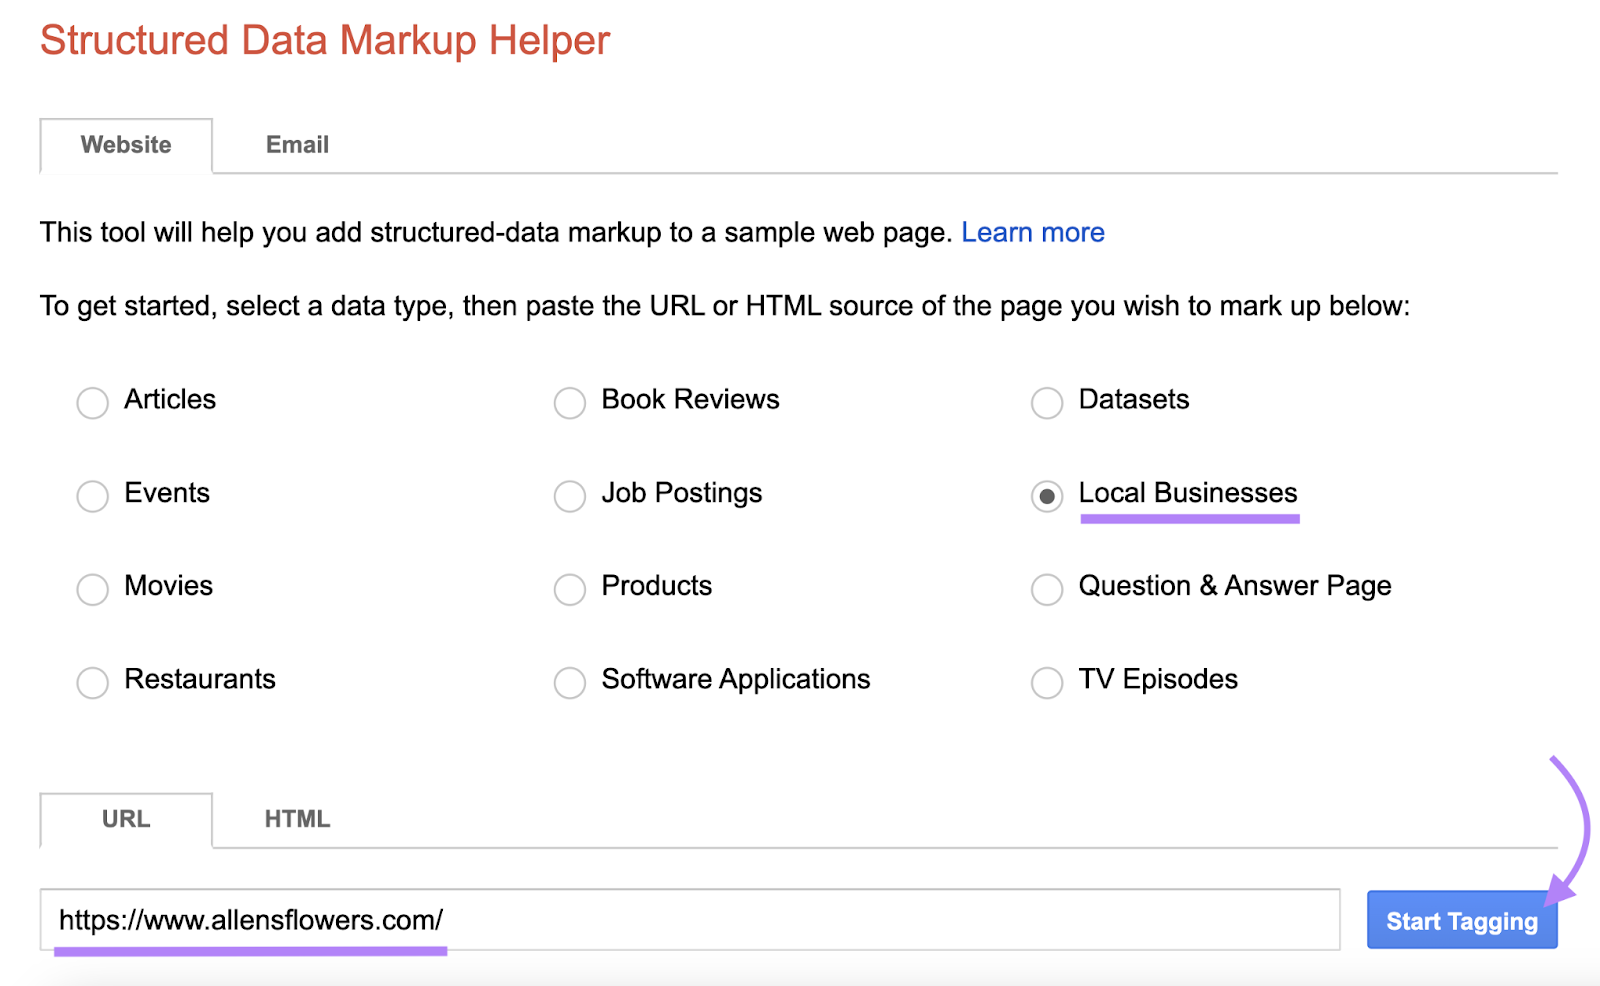 "Begin Tagging" button in Structured Data Markup Helper